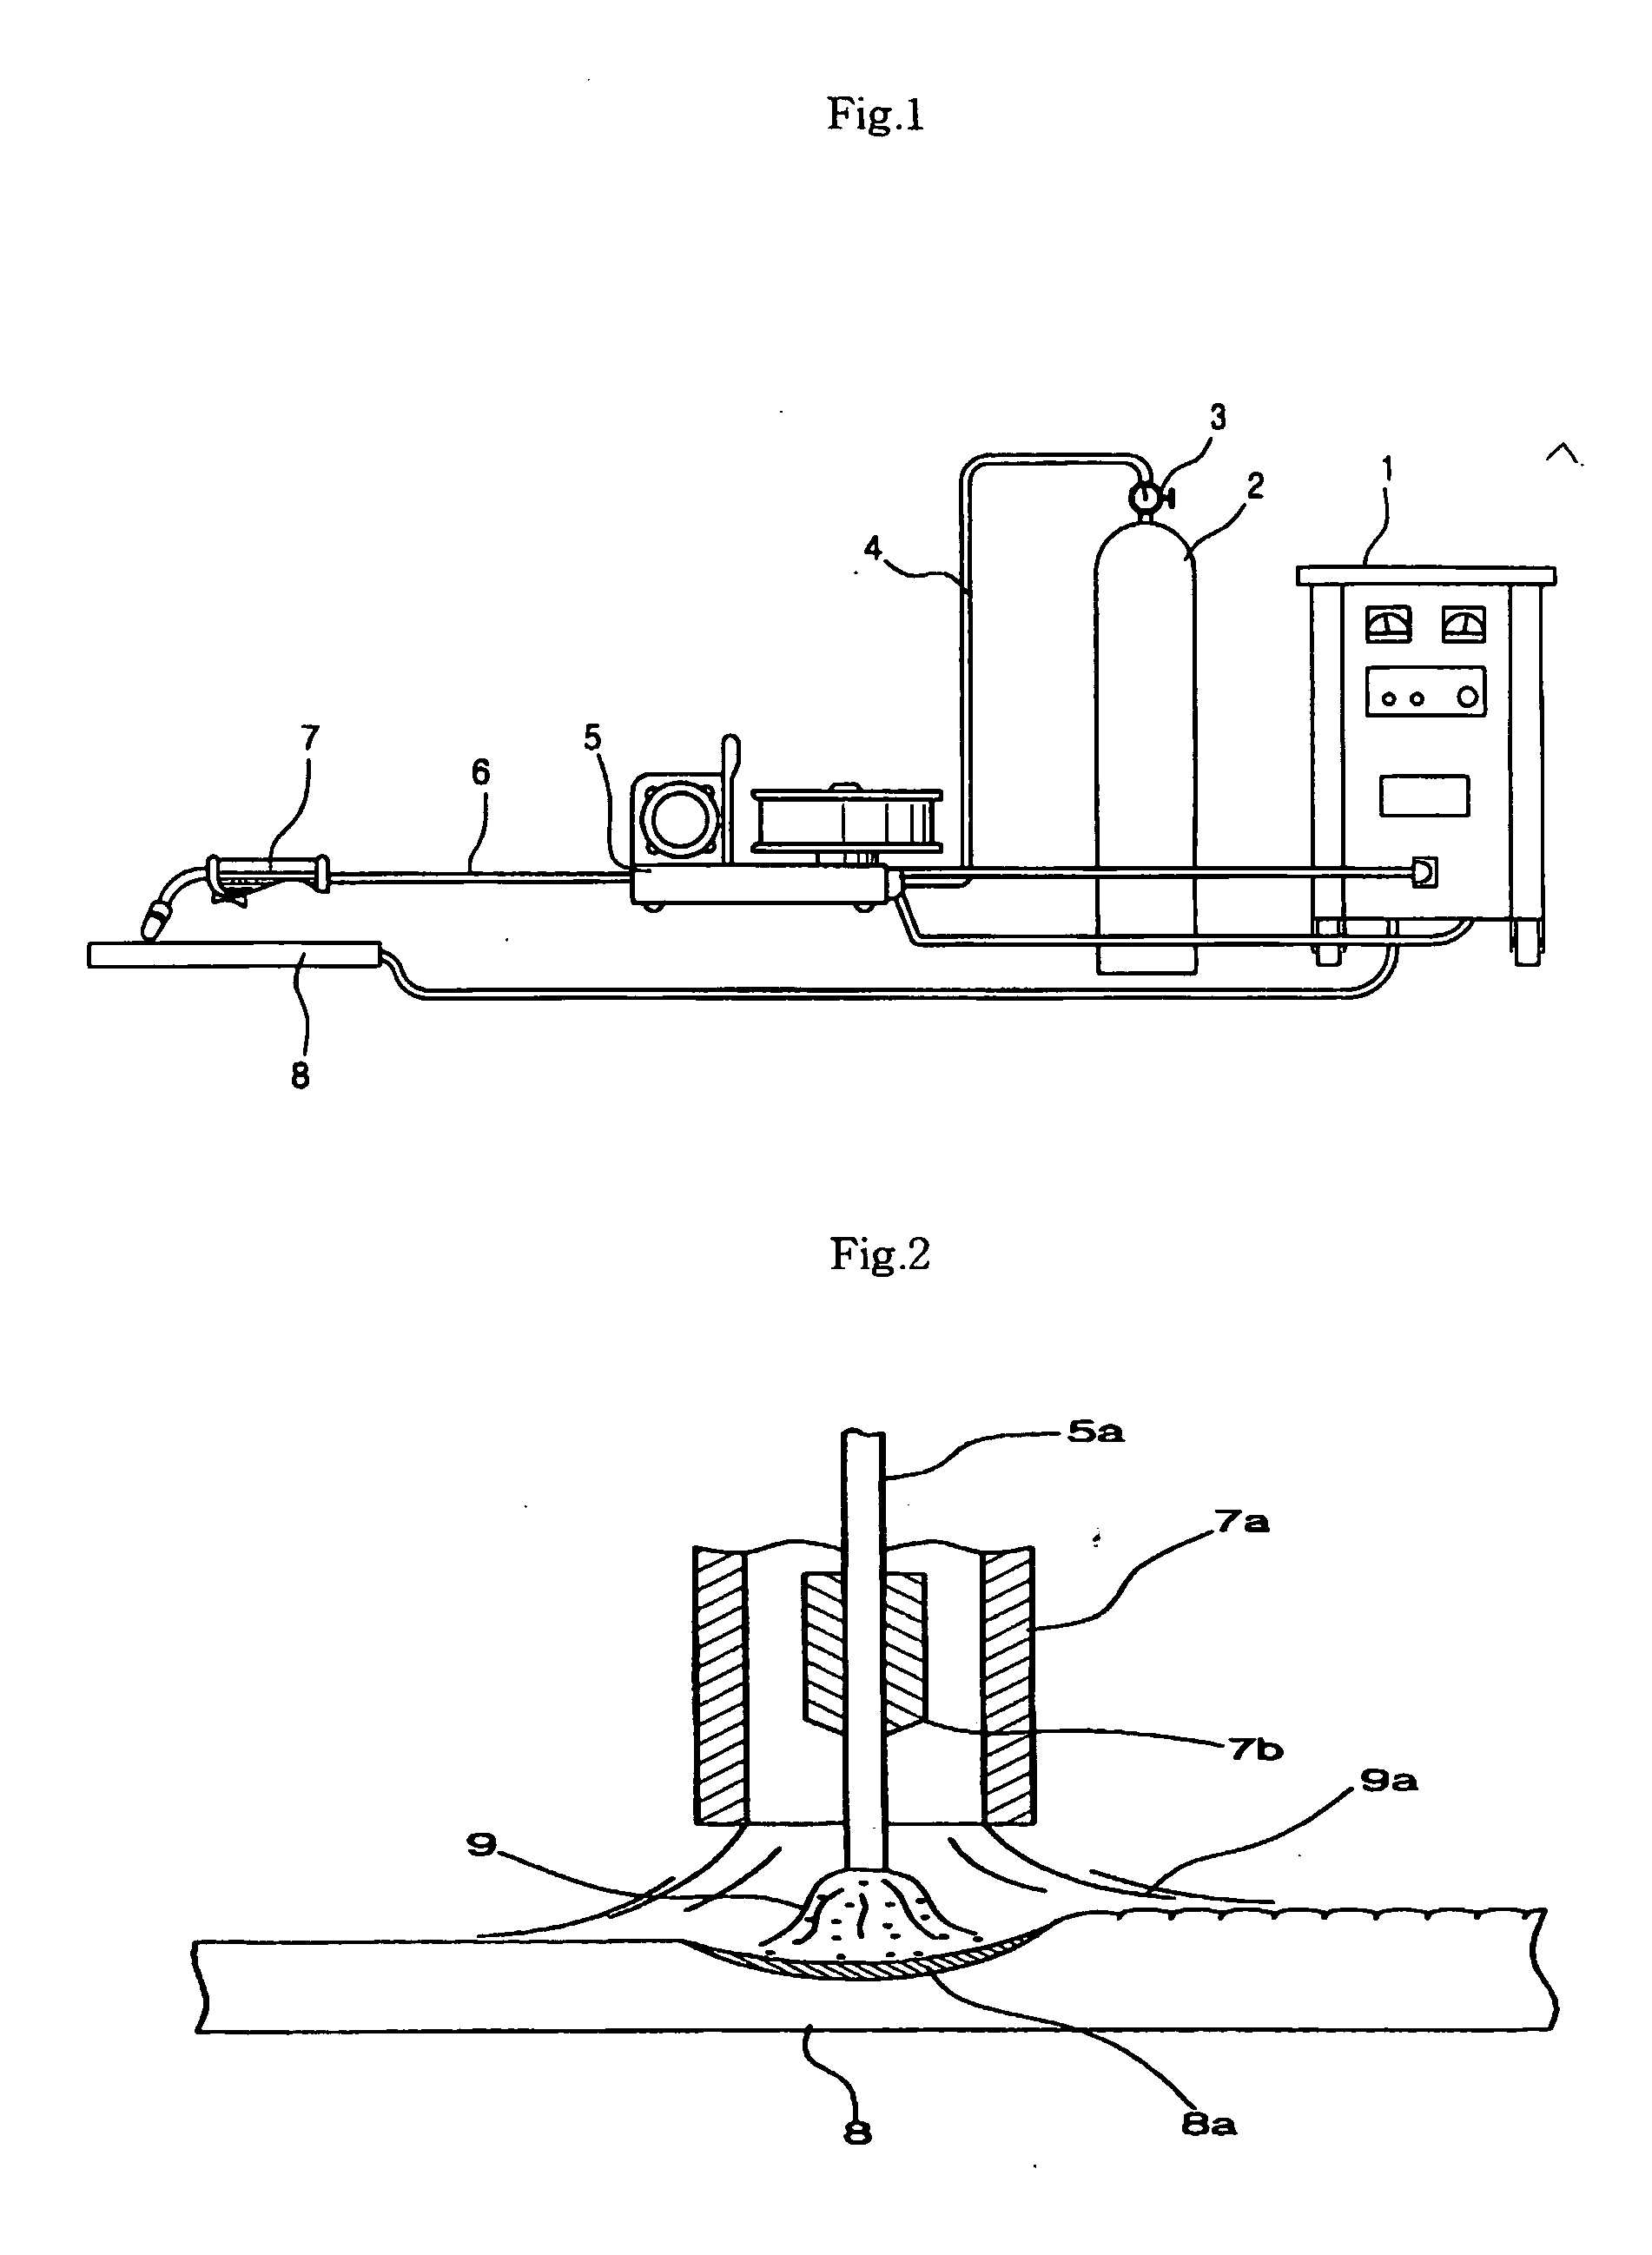 Impulse valve structure of apparatus for suppling inert gas alternately